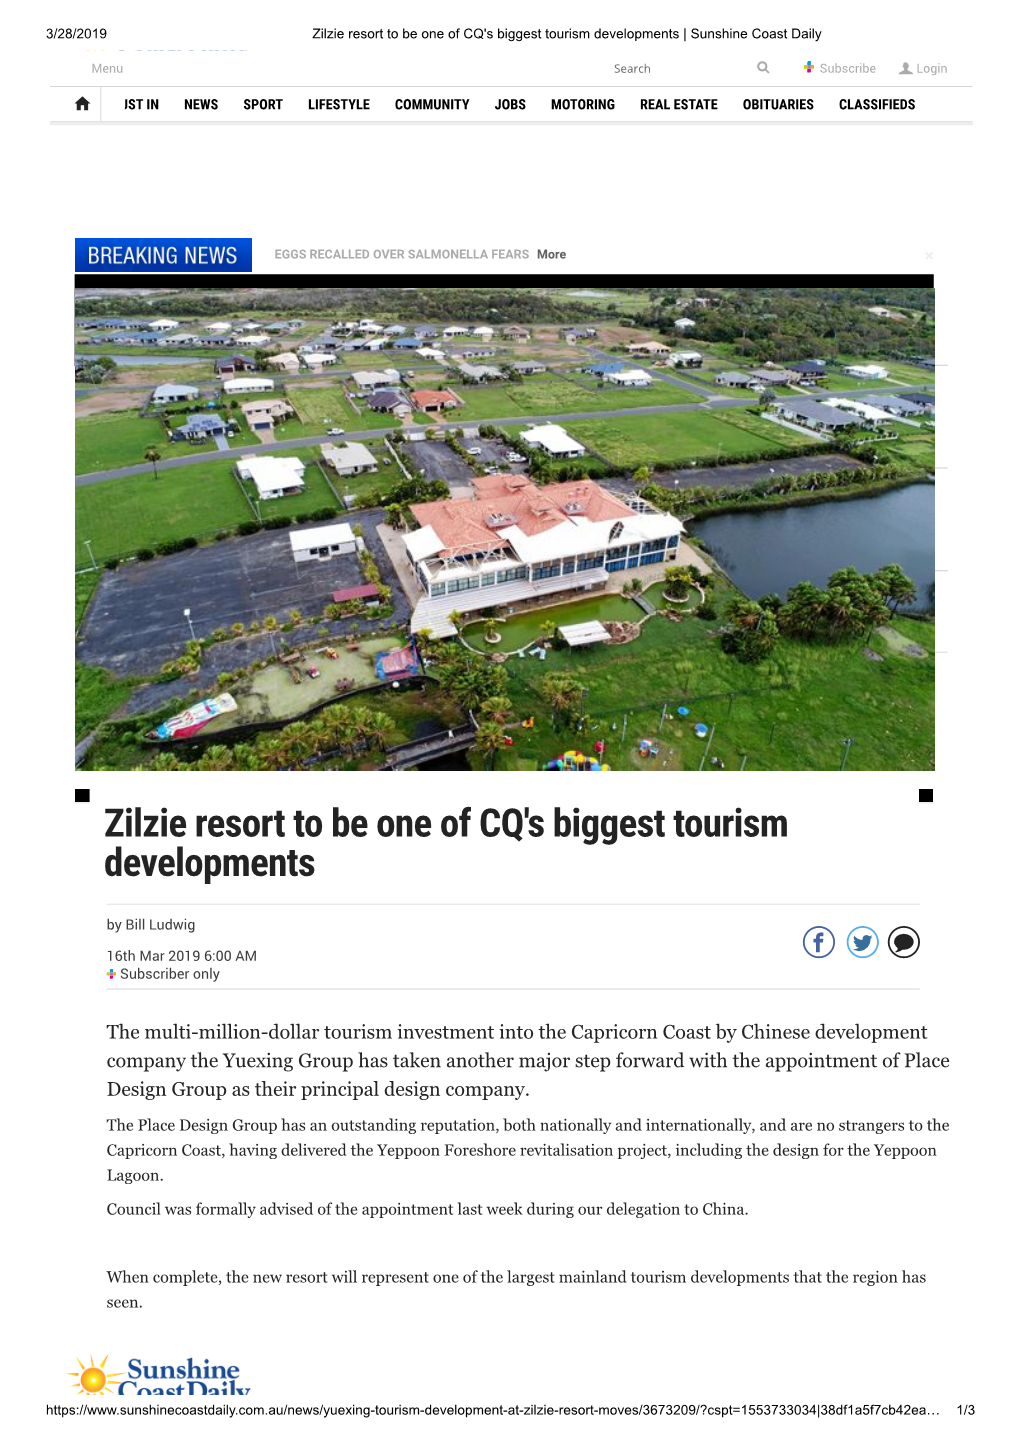 Zilzie Resort to Be One of CQ's Biggest Tourism Developments | Sunshine Coast Daily